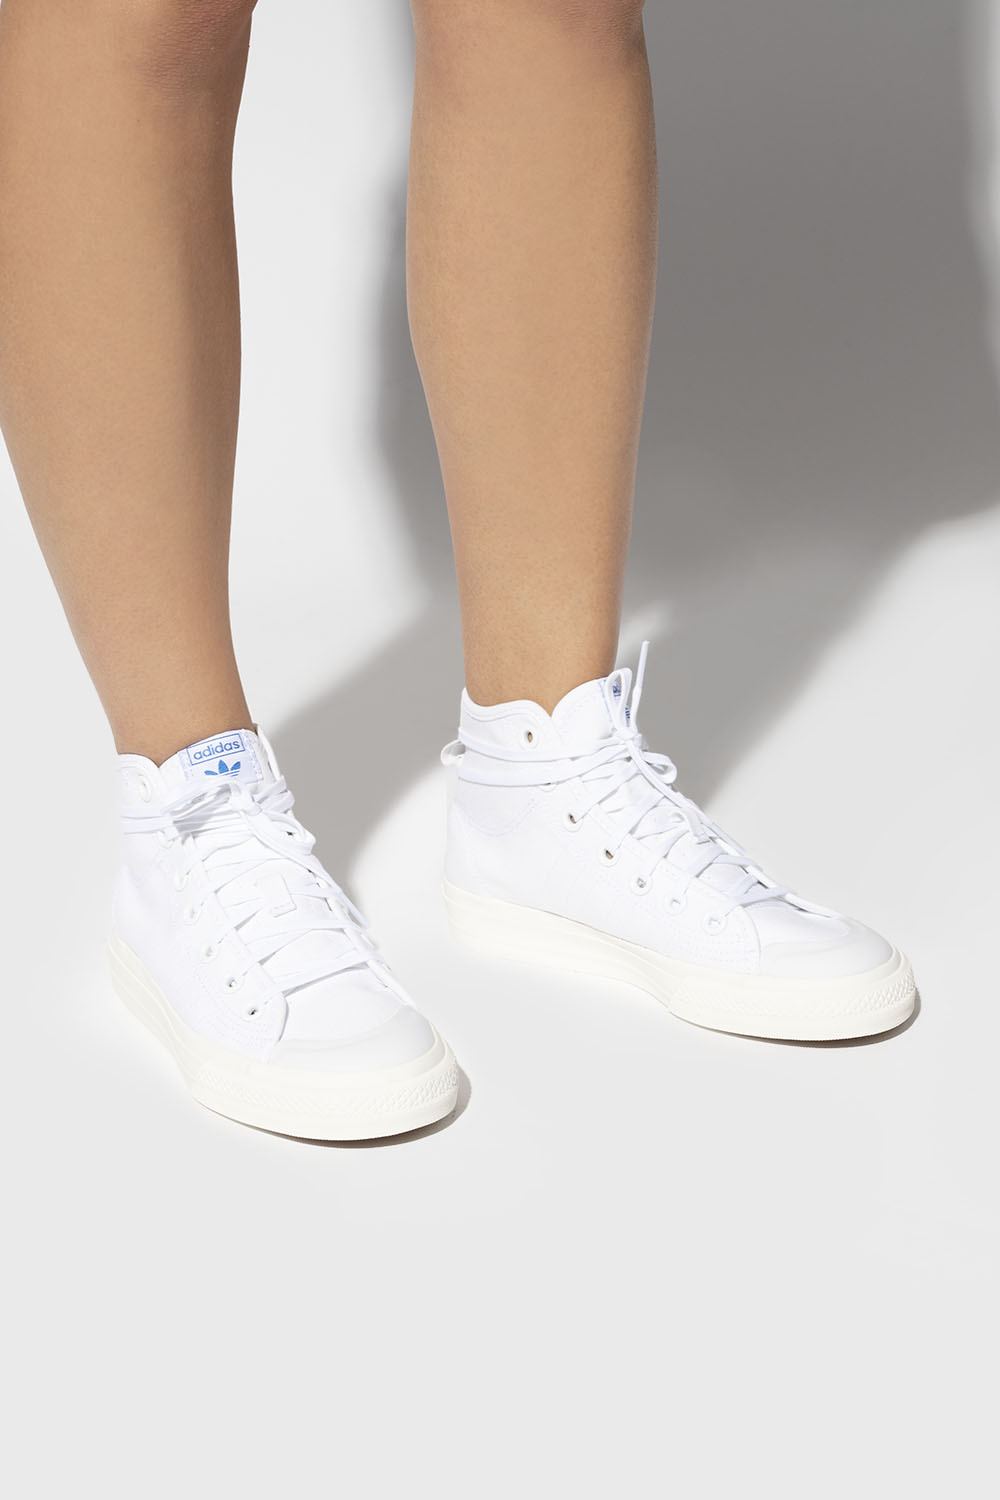 adidas ebay promo Finland Originals - ADIDAS - - liter \'Nizza sneakers IetpShops high RF\' Hi top code free 2